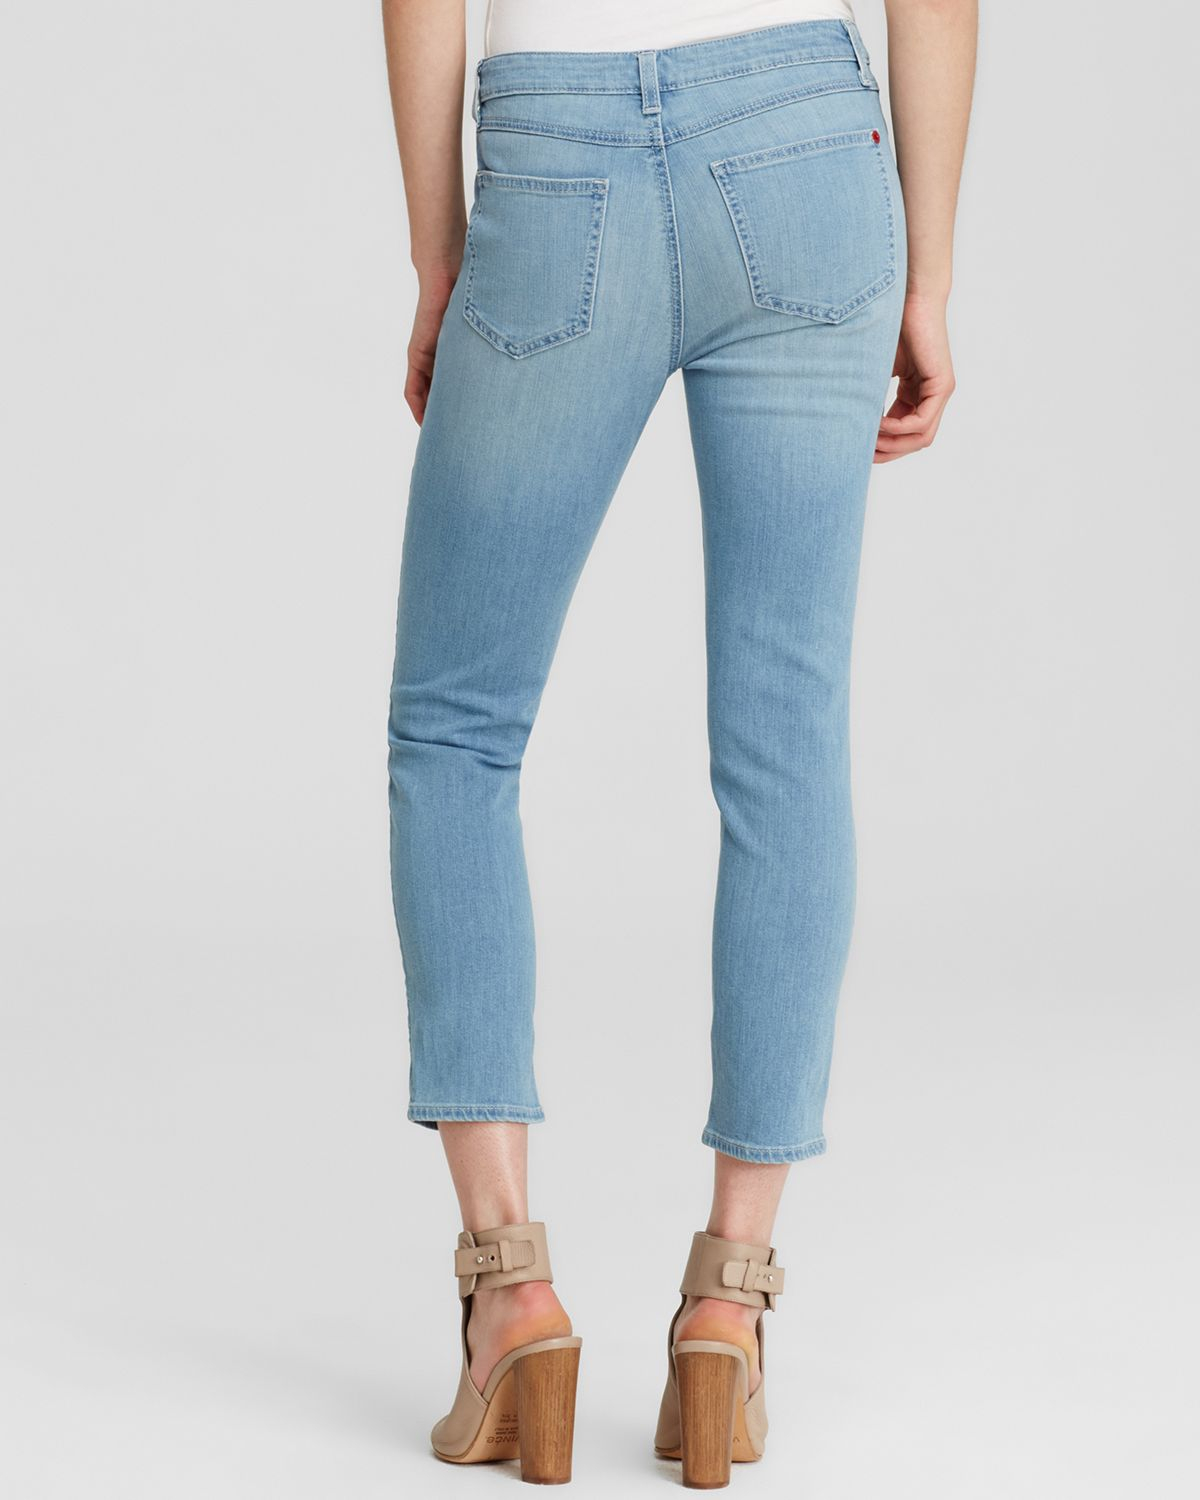 Lyst - Spanx Spanx® Denim Skinny Crop Jeans In Skylight Blue in Blue